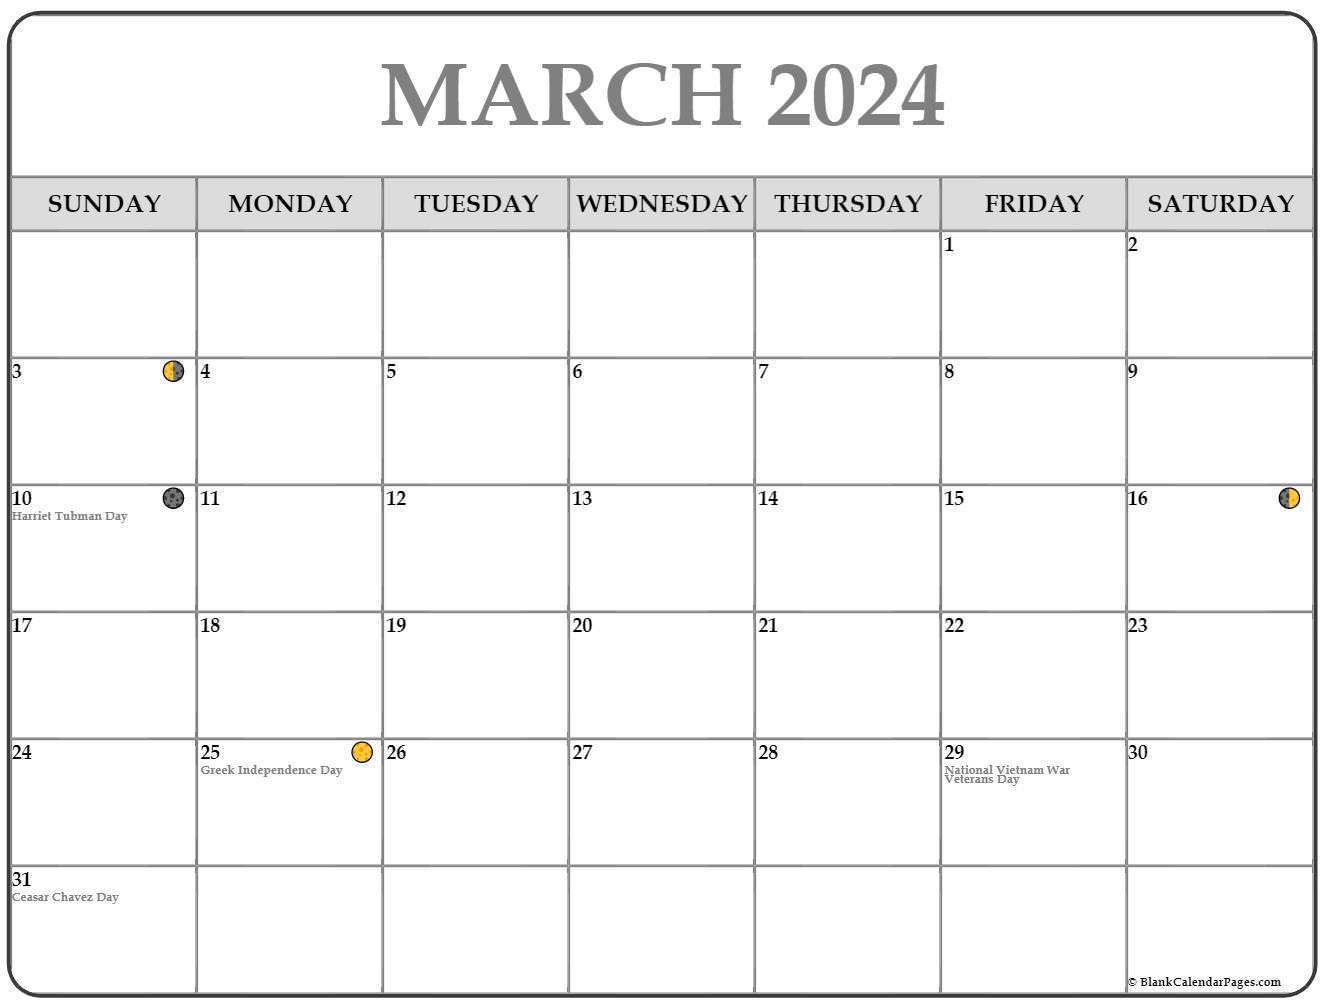 2024 March Lunar Calendar Printable Images Fall 2024 Calendar